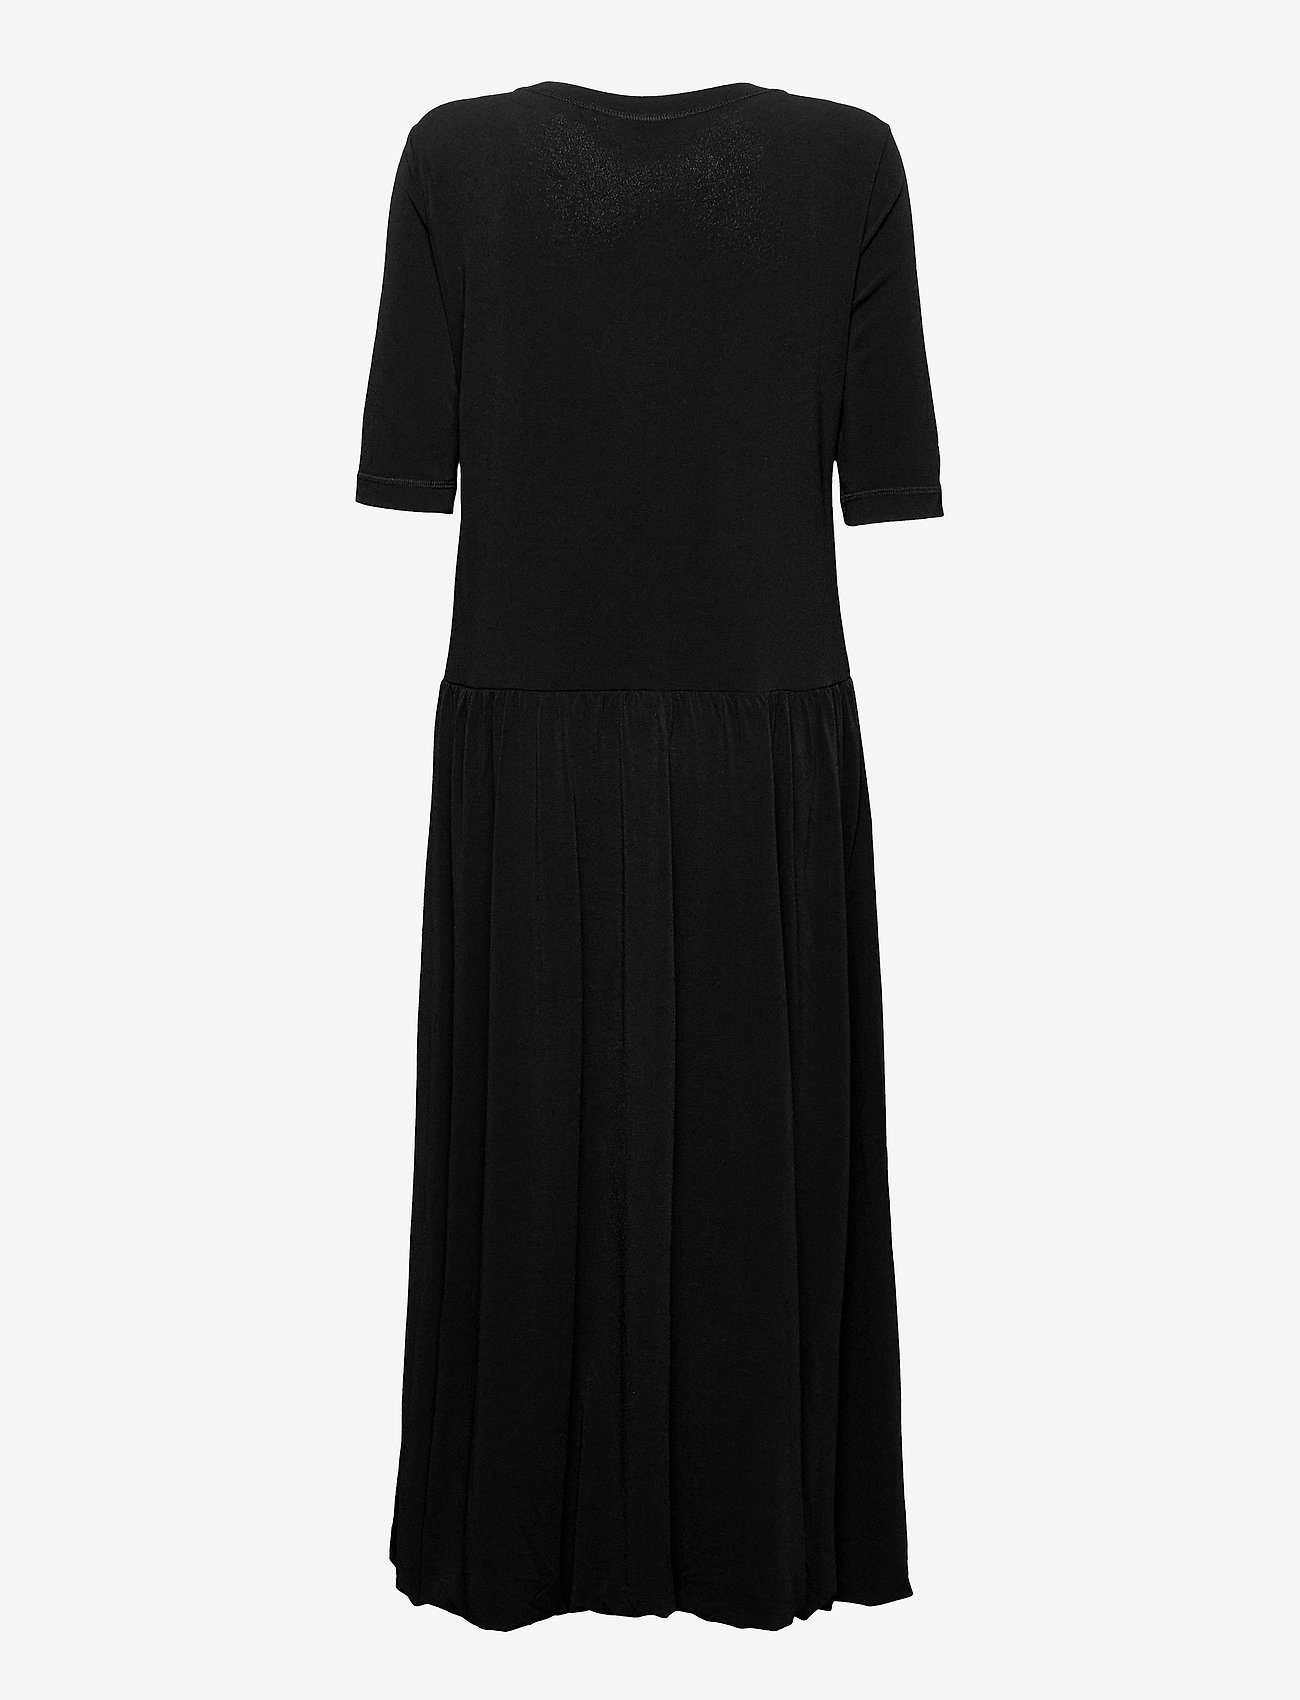 InWear - BenIW Dress - maxikjoler - black - 1